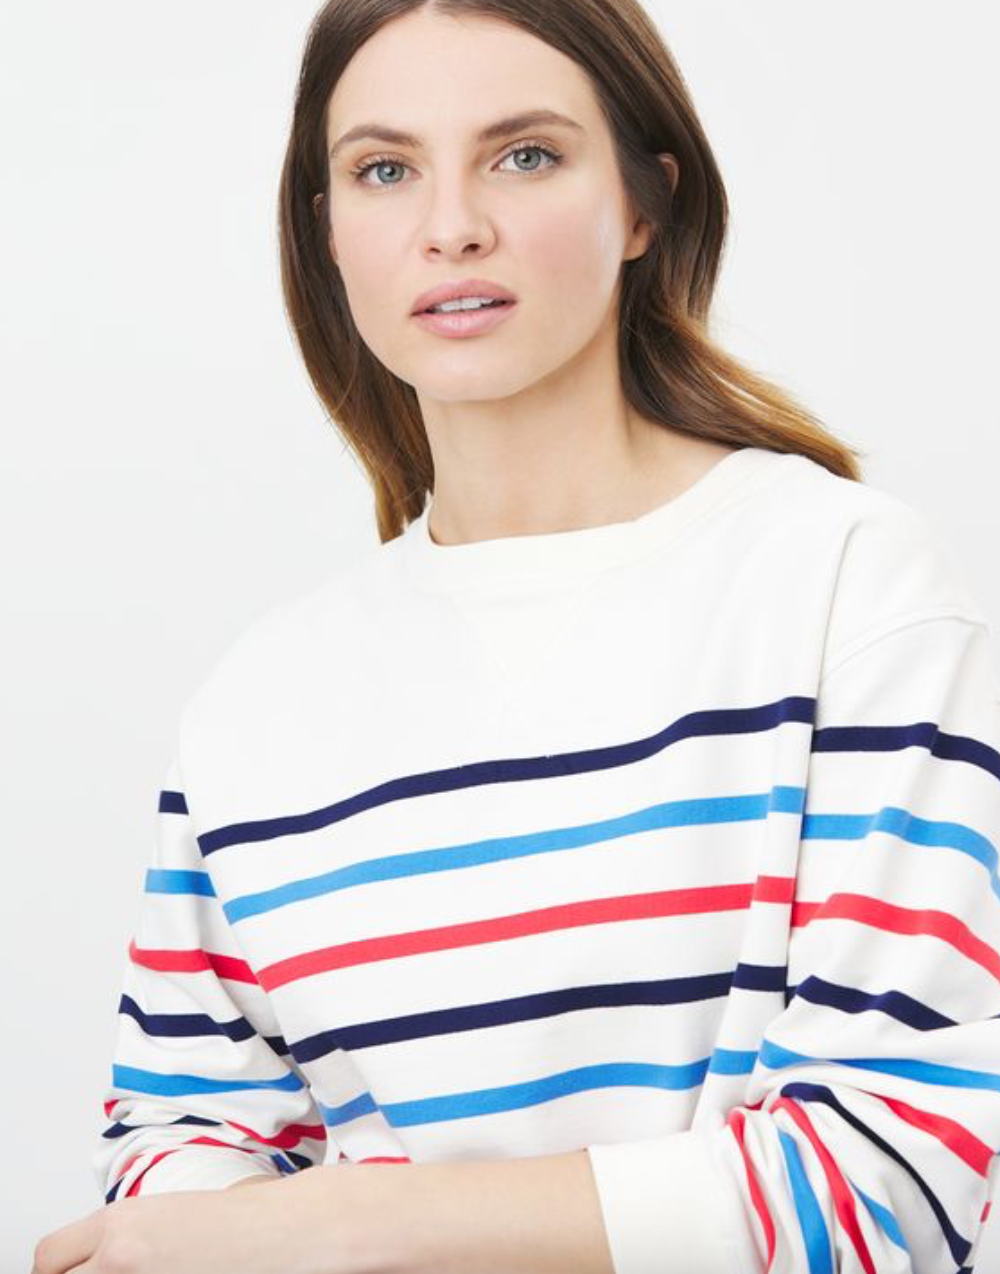 Joules - Women's Monique Crew Neck Sweatshirt - Cream Multi Navy